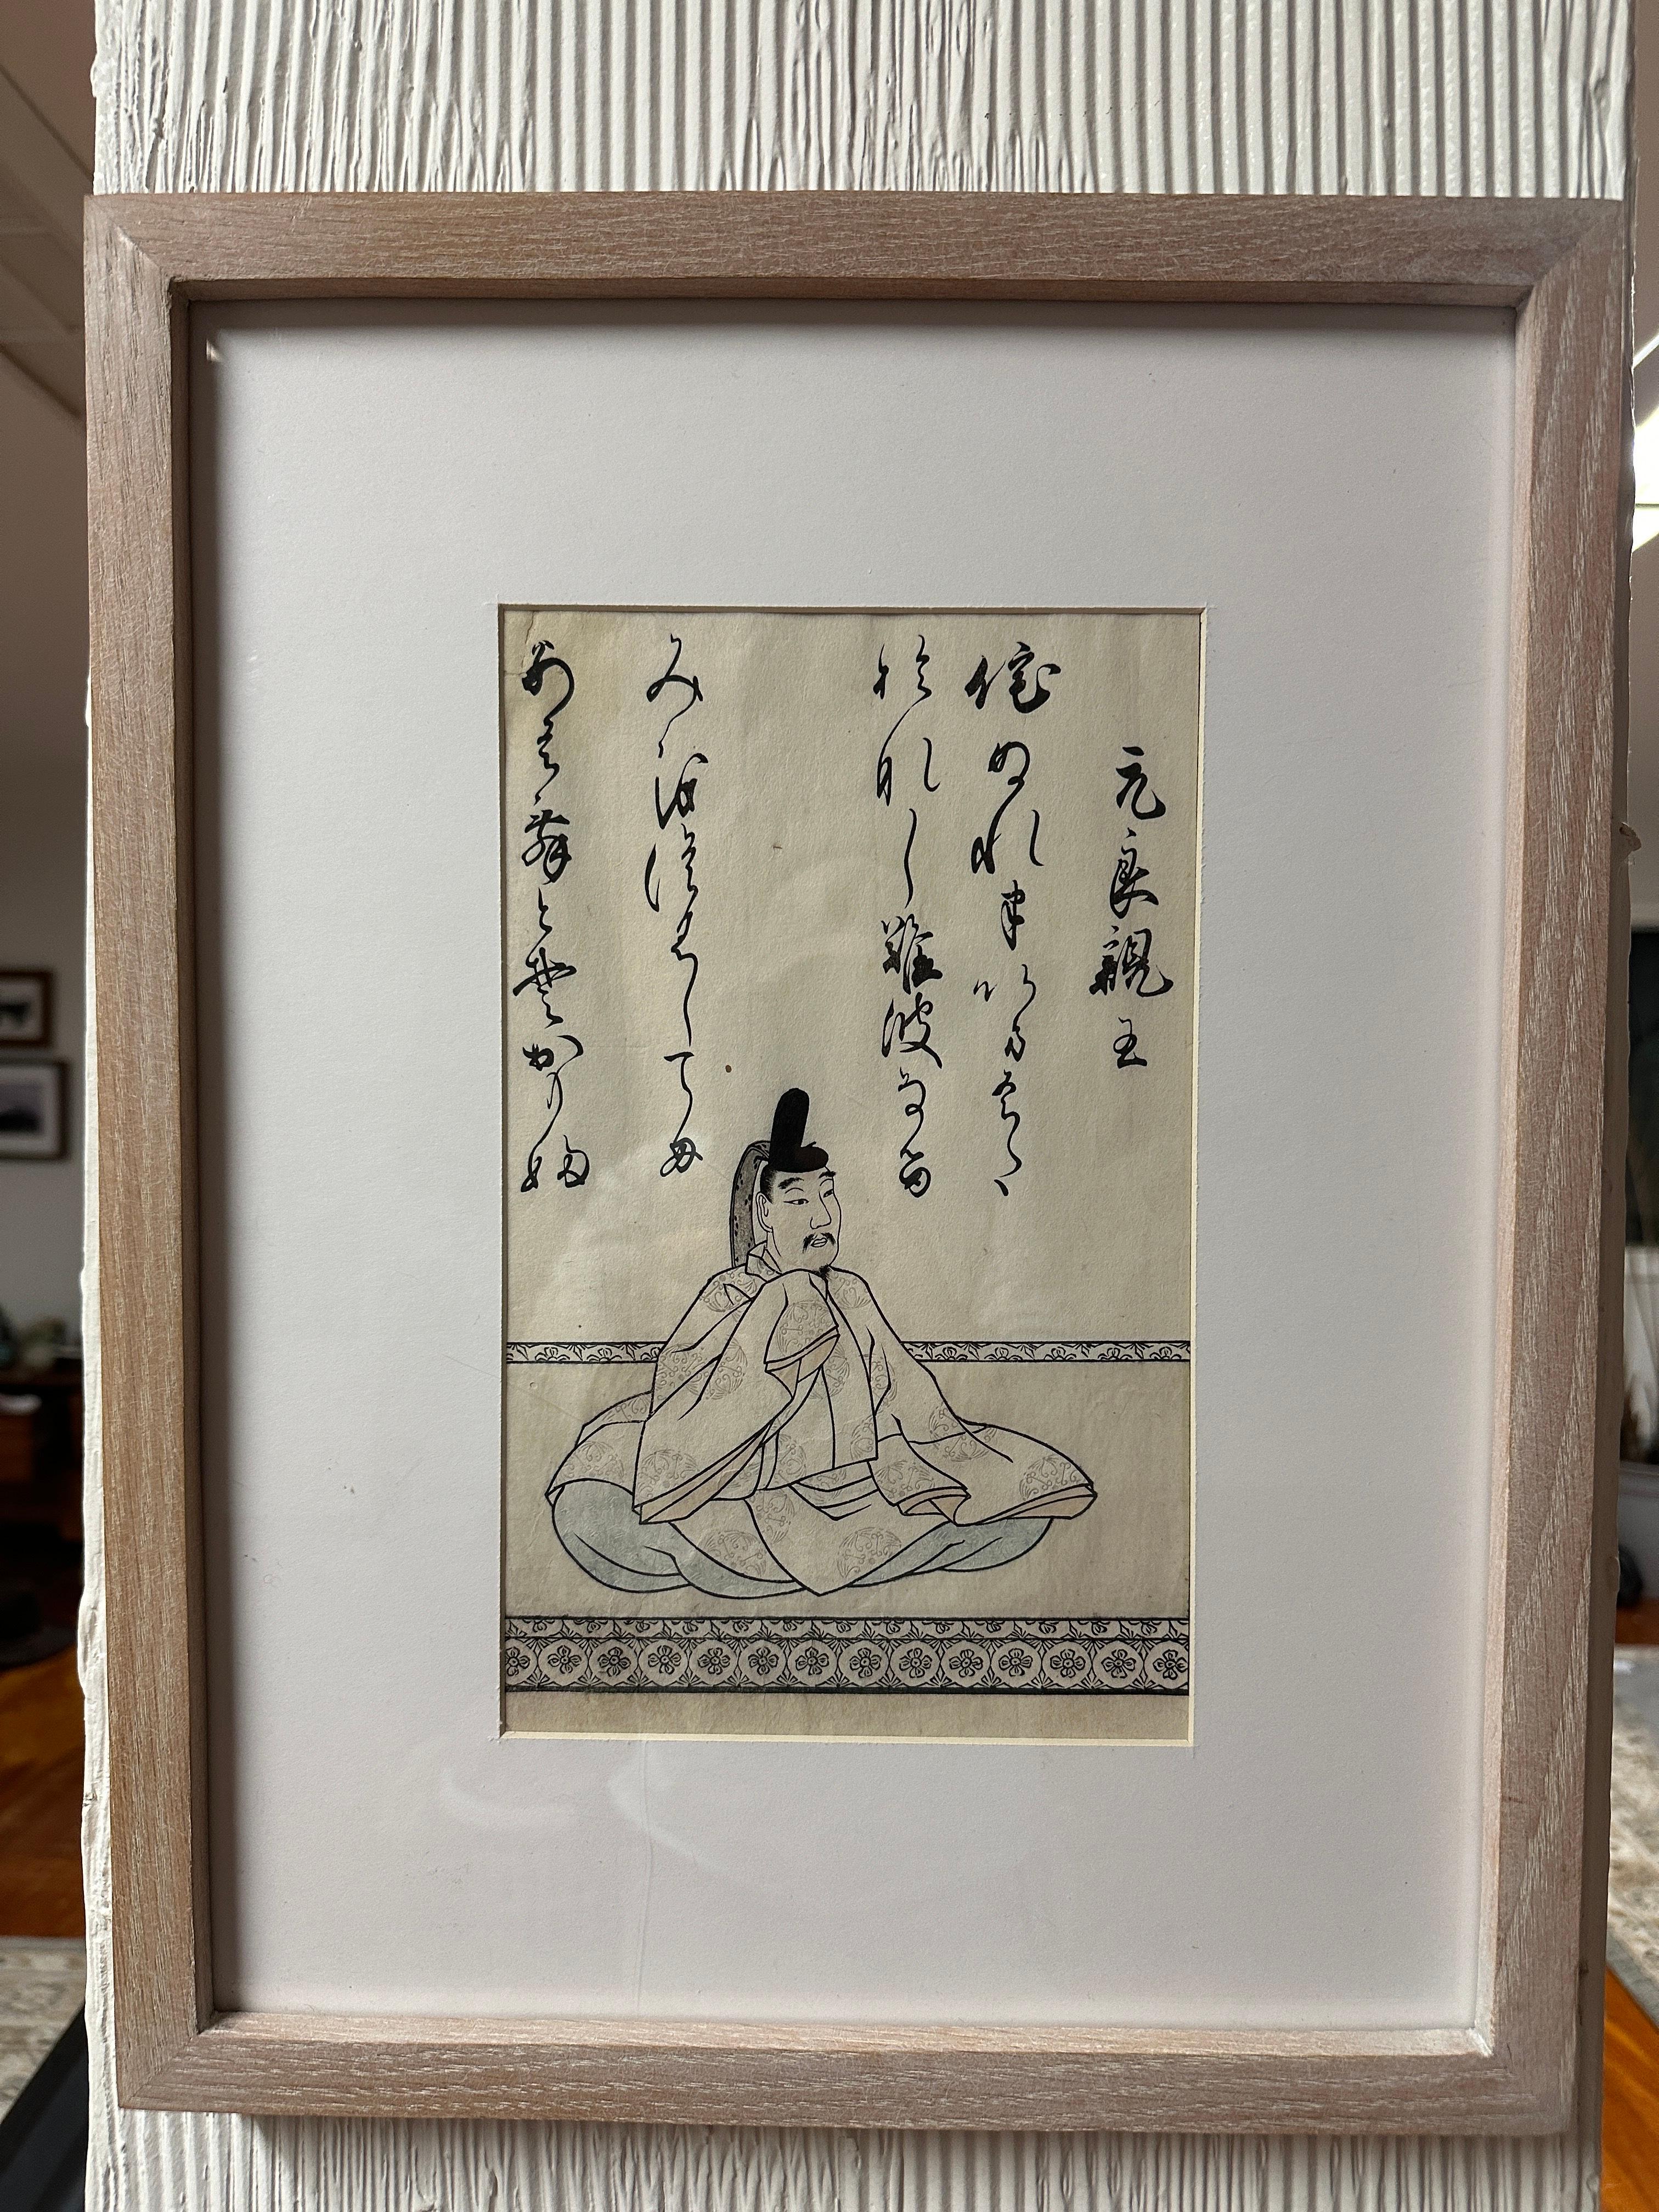 Dated between 1738-1806 Mitsusada Tosa
Printed 1806-1808
Engraver Jihei Inoue
Printer Kisaburo Hori